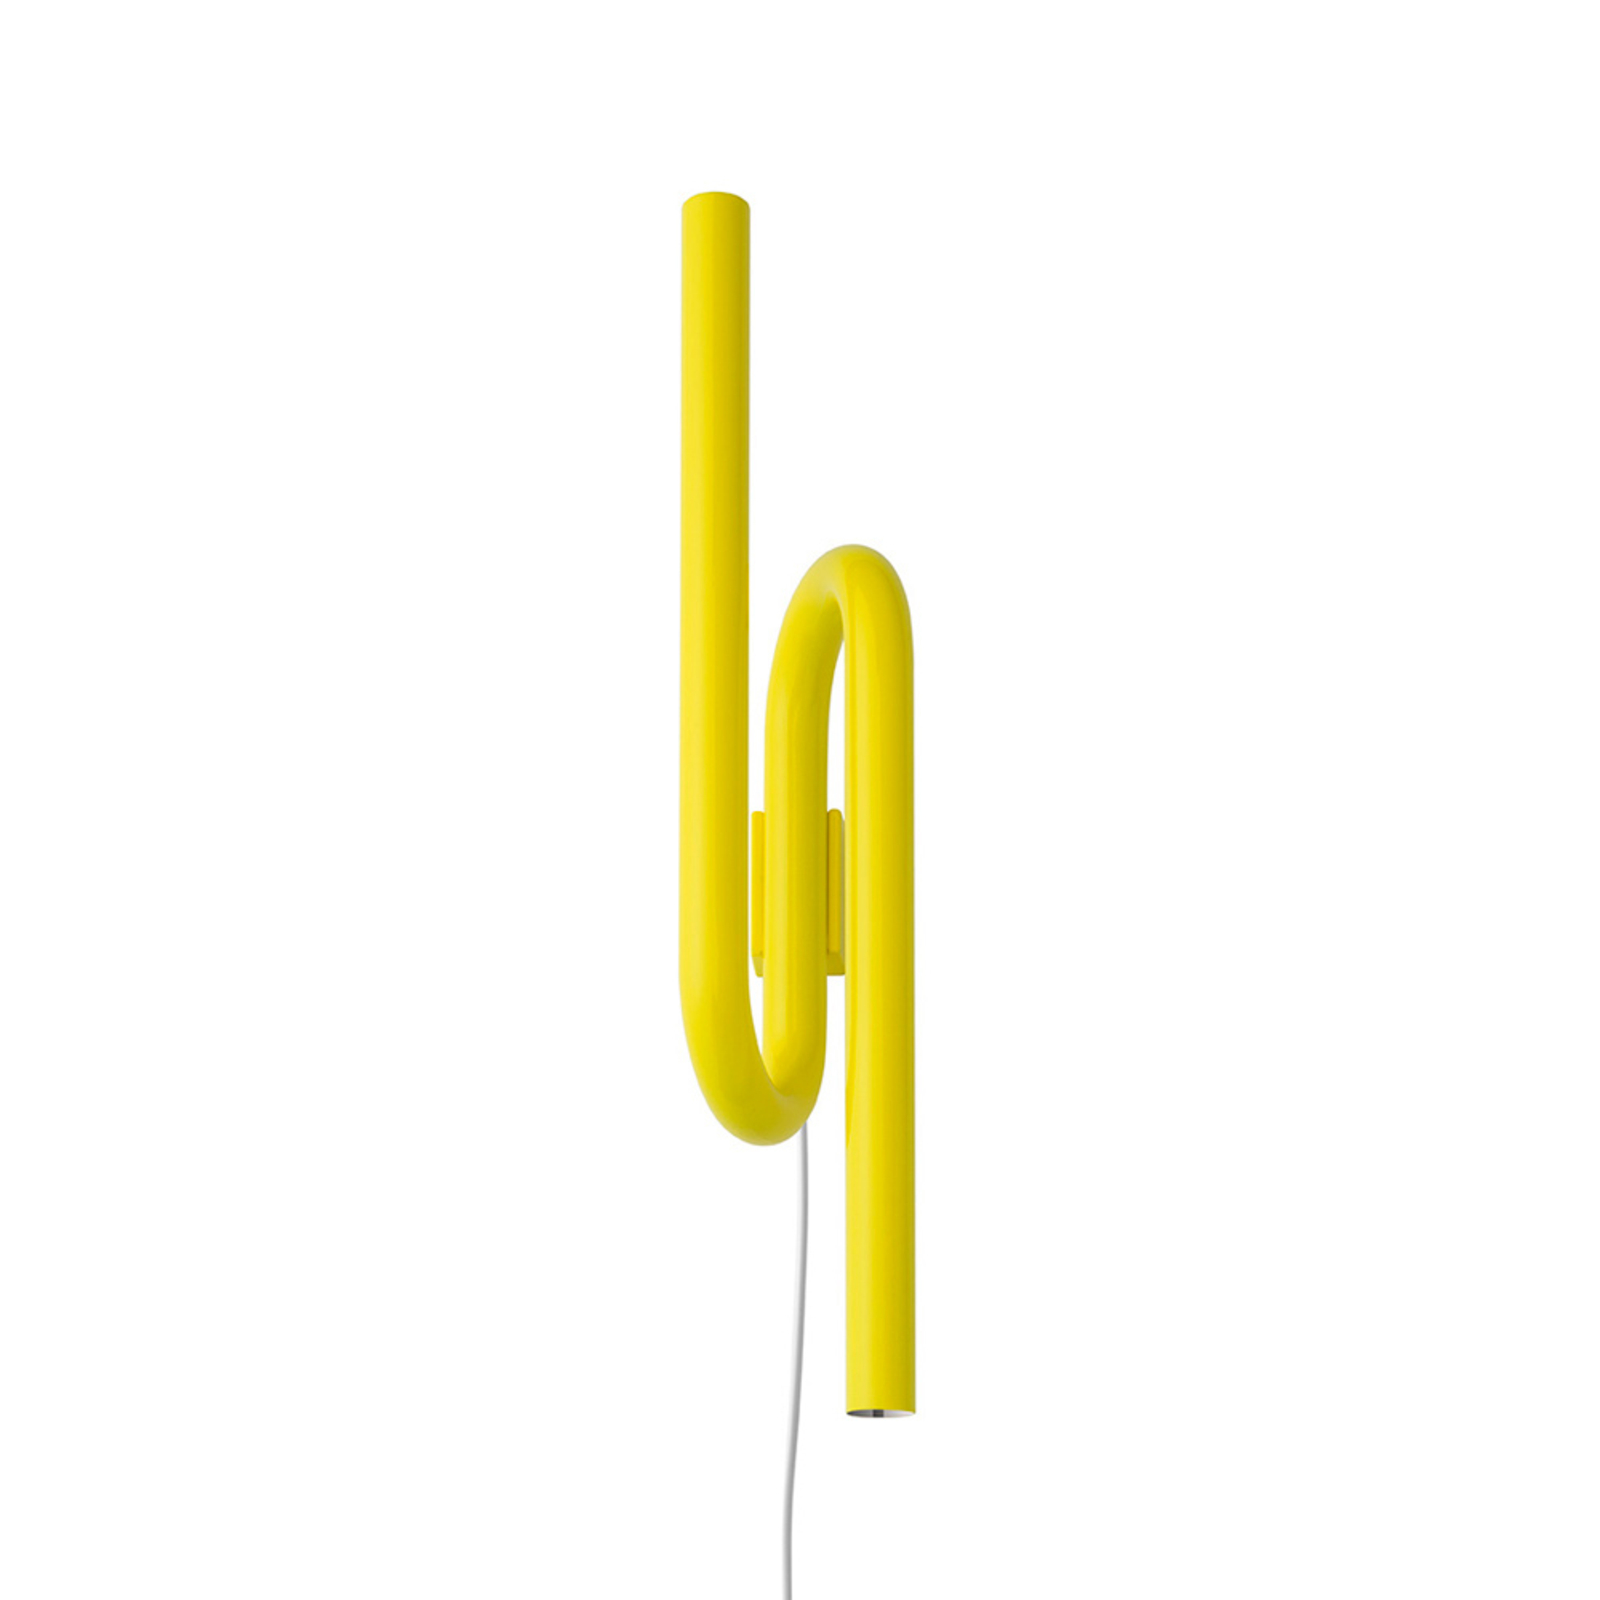 Foscarini Tobia LED-vägglampa med gul kabel